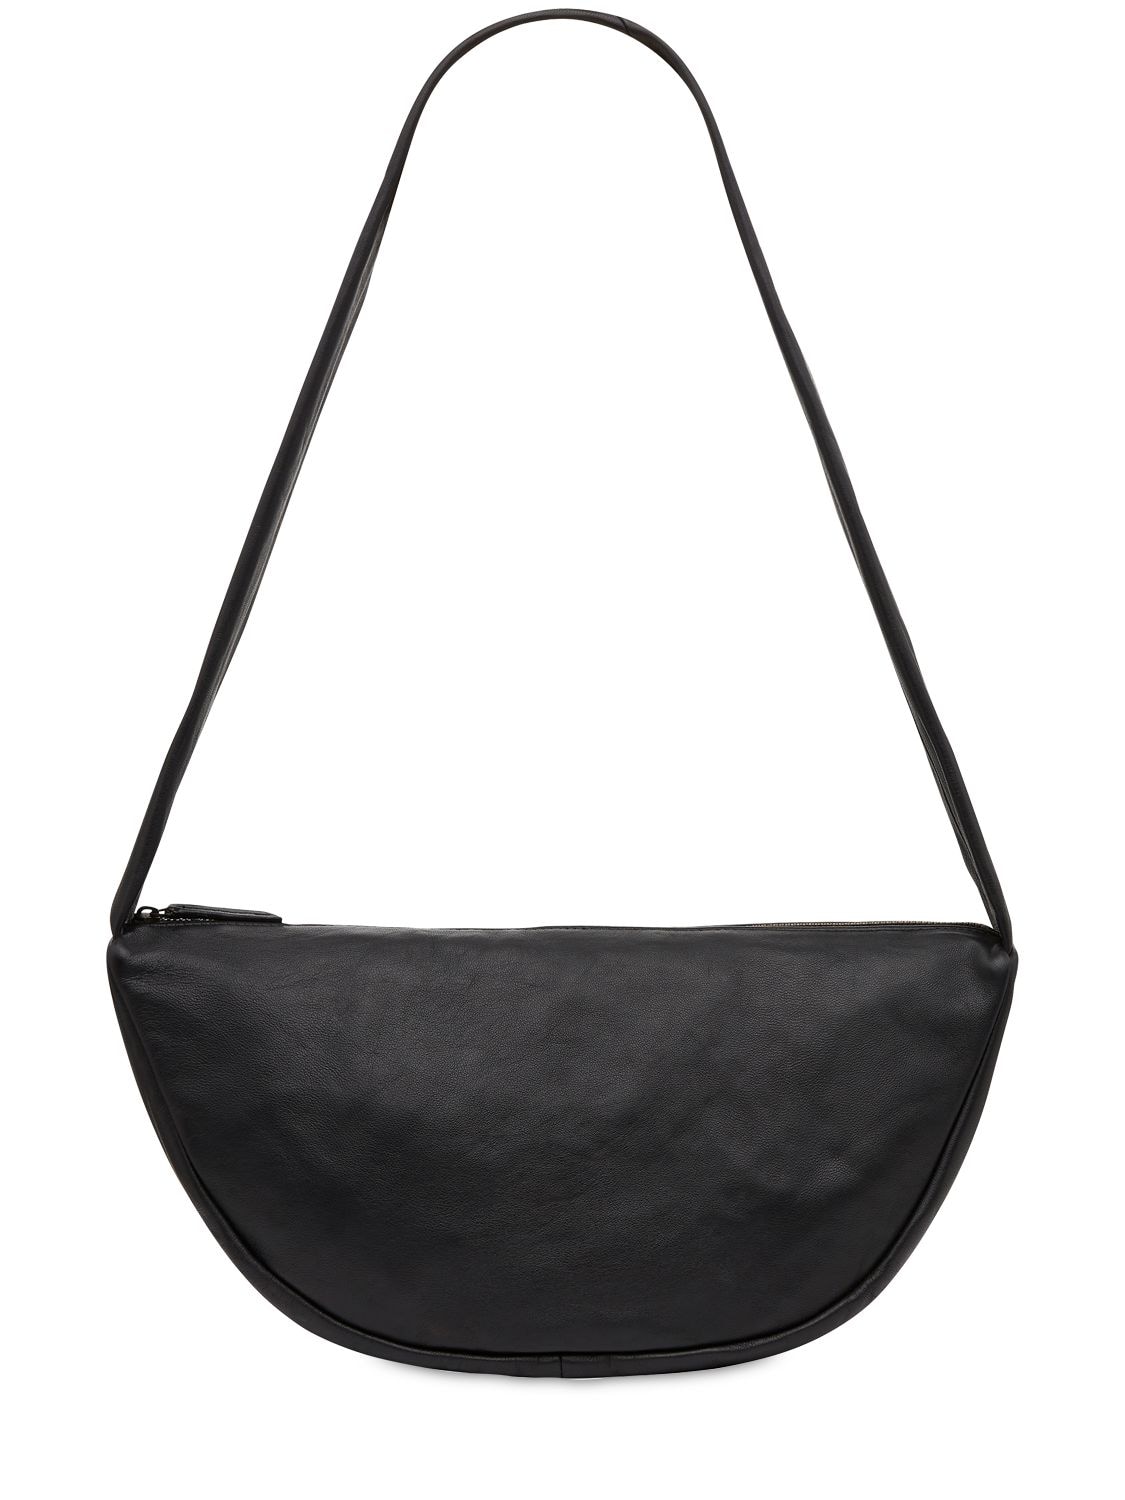 St.agni Small Crescent Leather Bag In Black